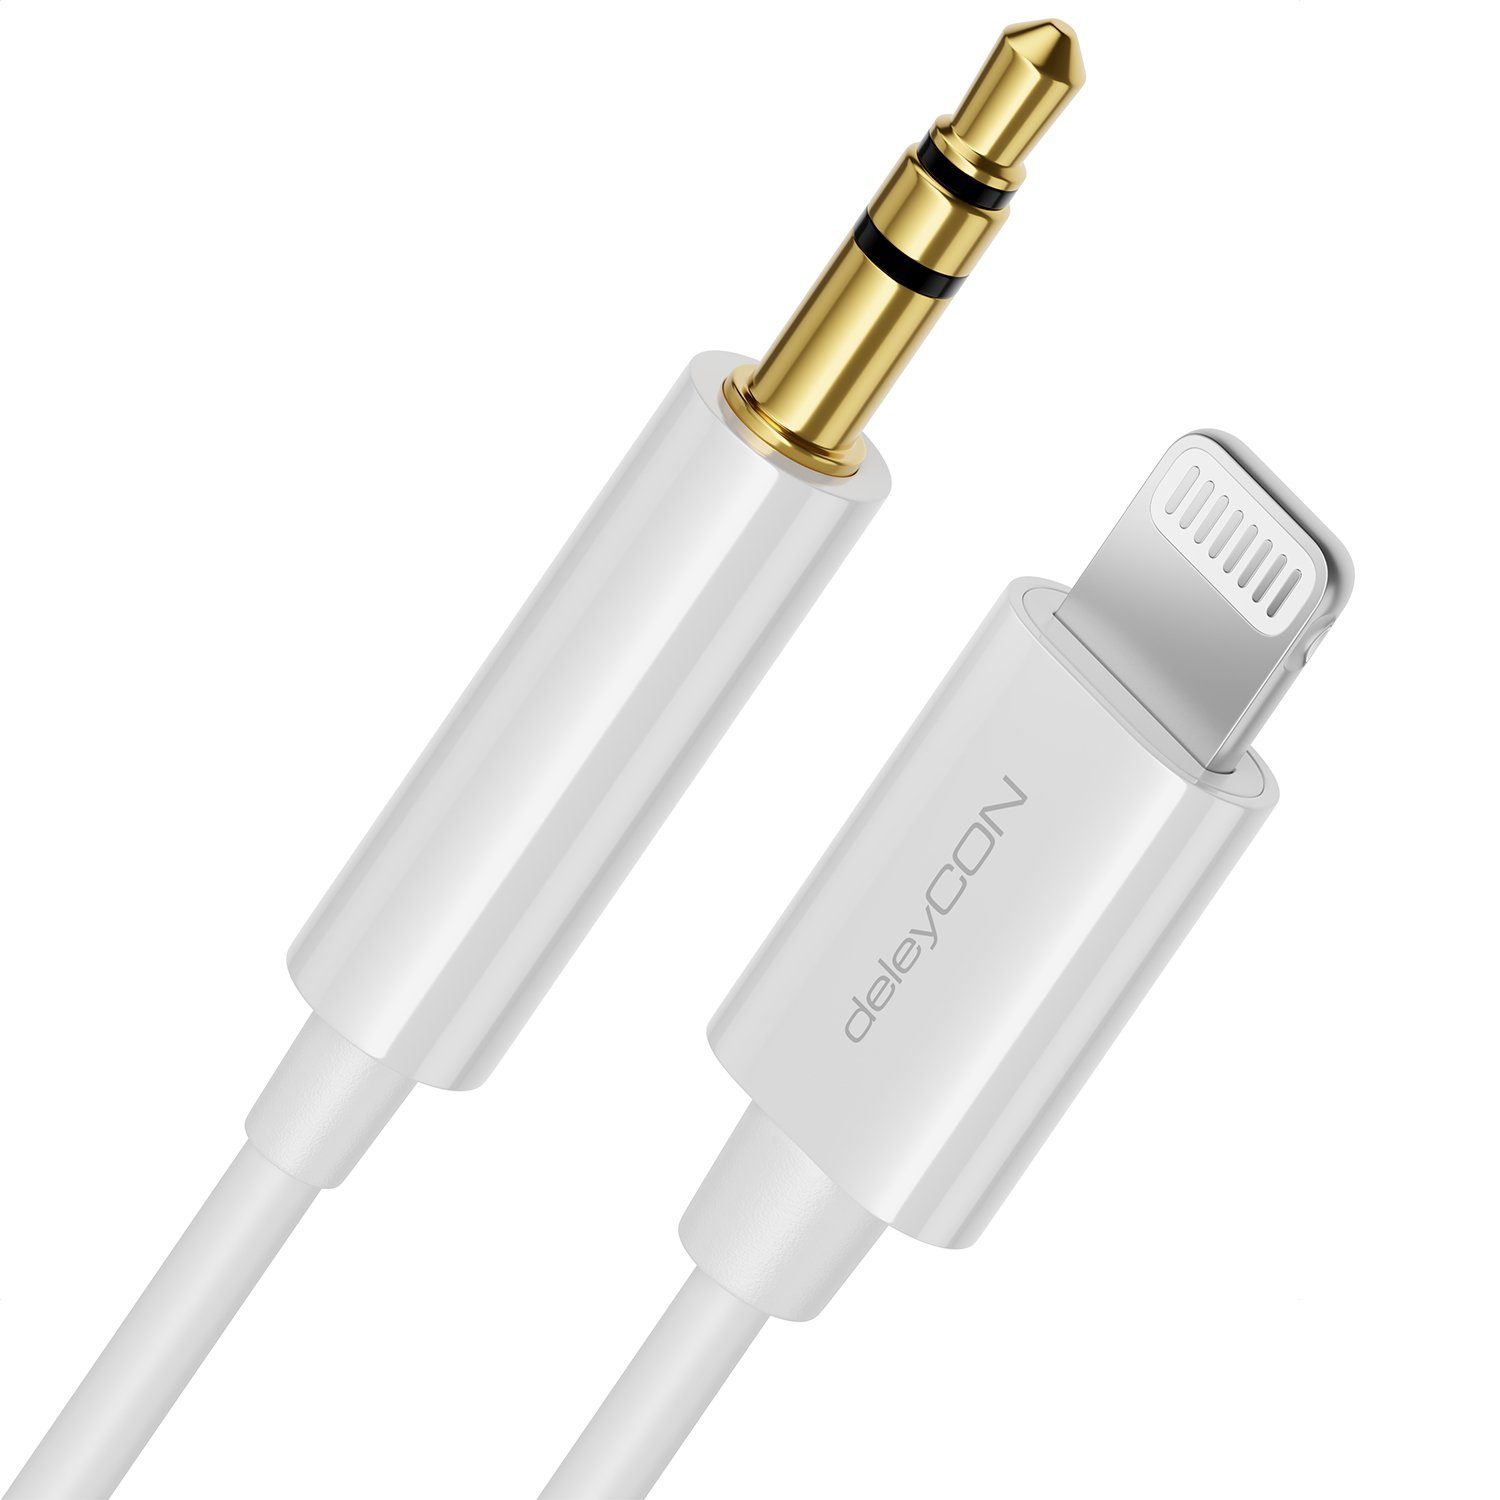 deleyCON deleyCON 0,5m Lightning 8 Pin zu 3,5mm Klinke Audiokabel MFi für  Smartphone-Kabel, deleyCON Apple Lightning 8-Pin Audiokabel 3,5mm Klinke //  Apple MFi zertifiziert